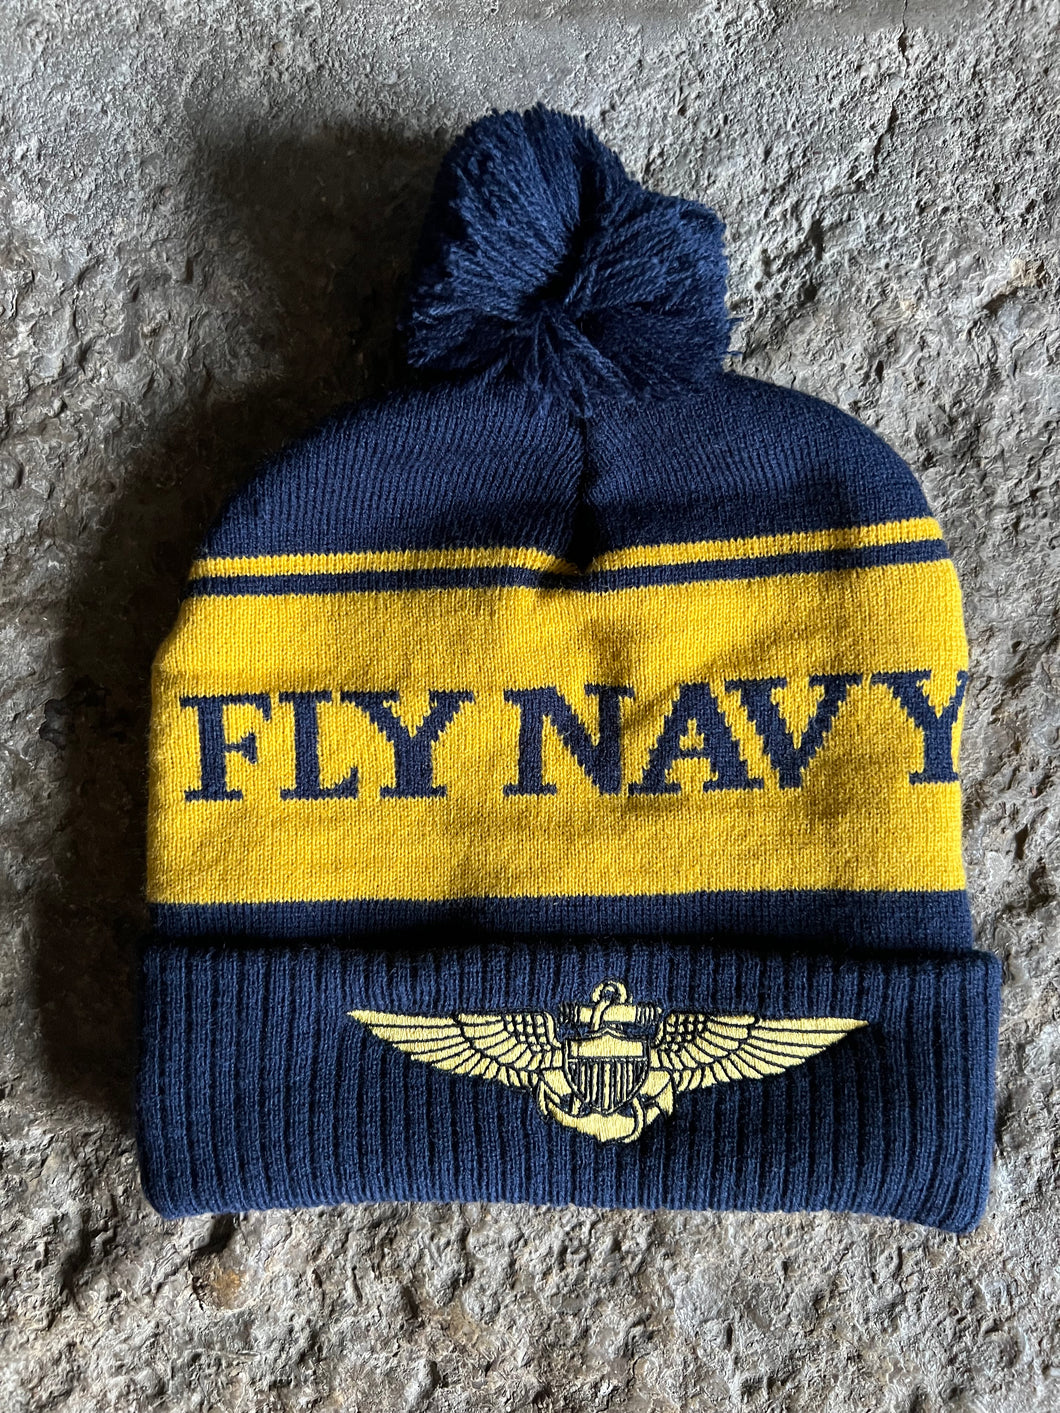 Fly Navy Beanie